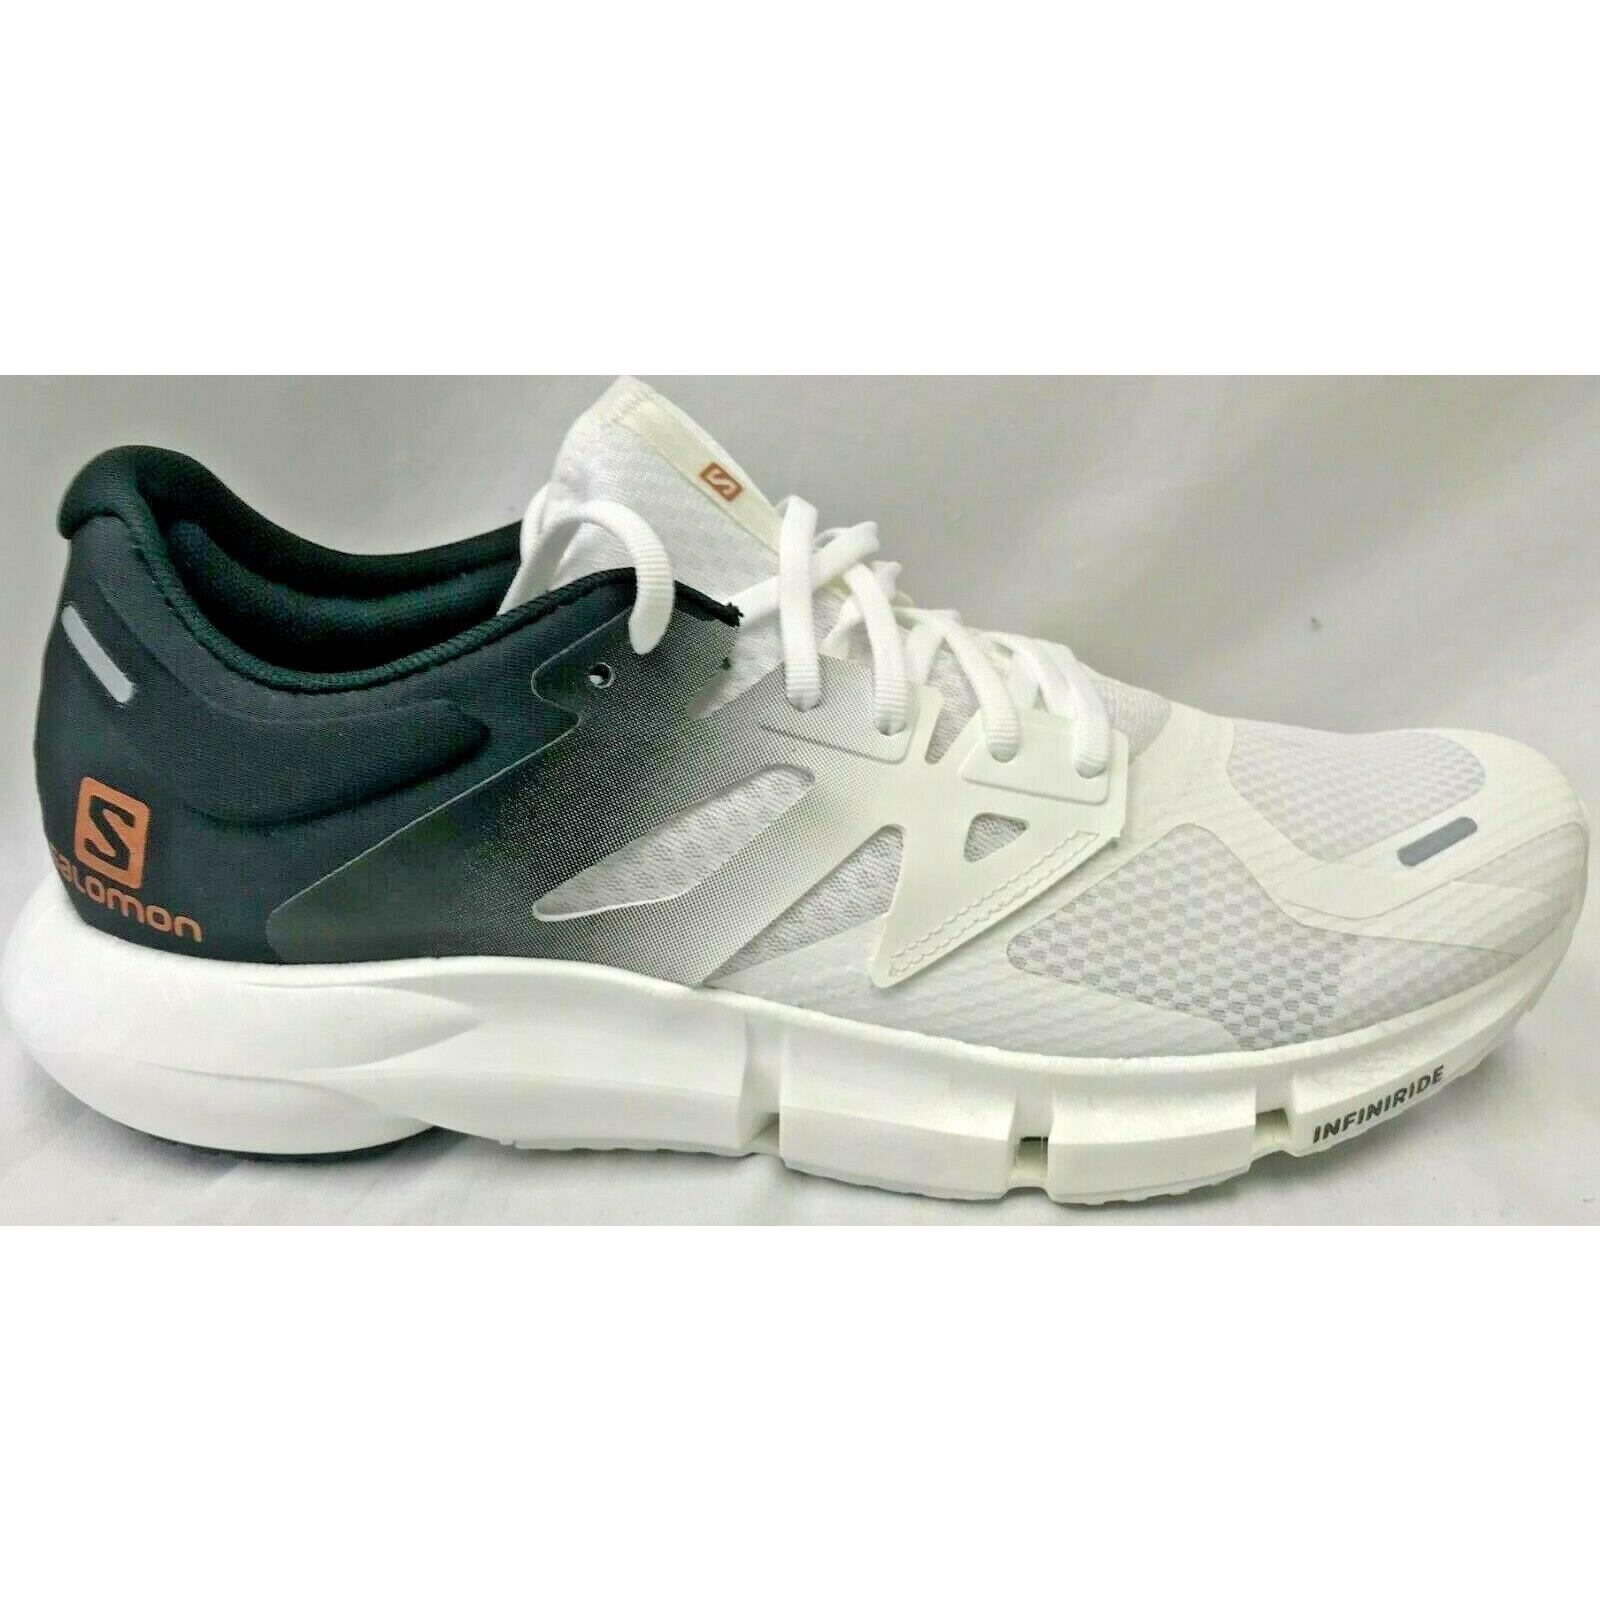 Salomon Womens Predict 2 Running Shoes L41125700 Wht/blk/wht Size 8.5